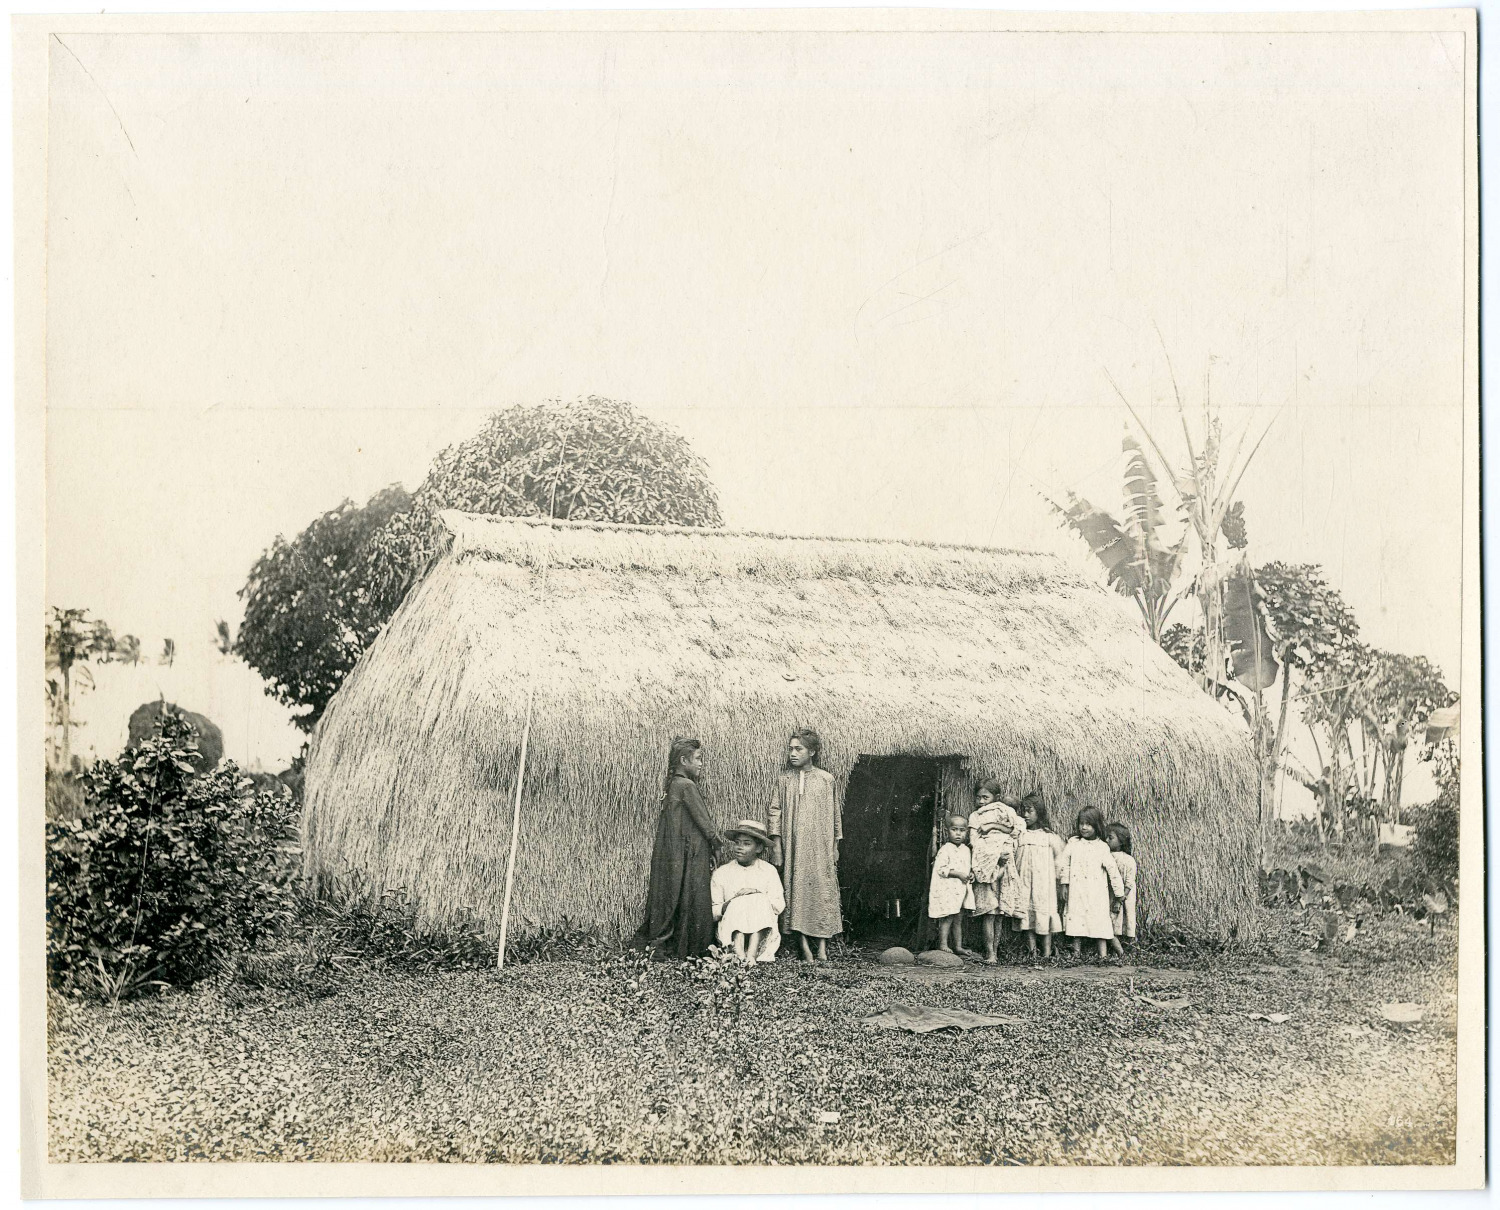 Hawaii, USA, Hawaiian Children Standing in Front of a Grass Hut, Vintage Albums